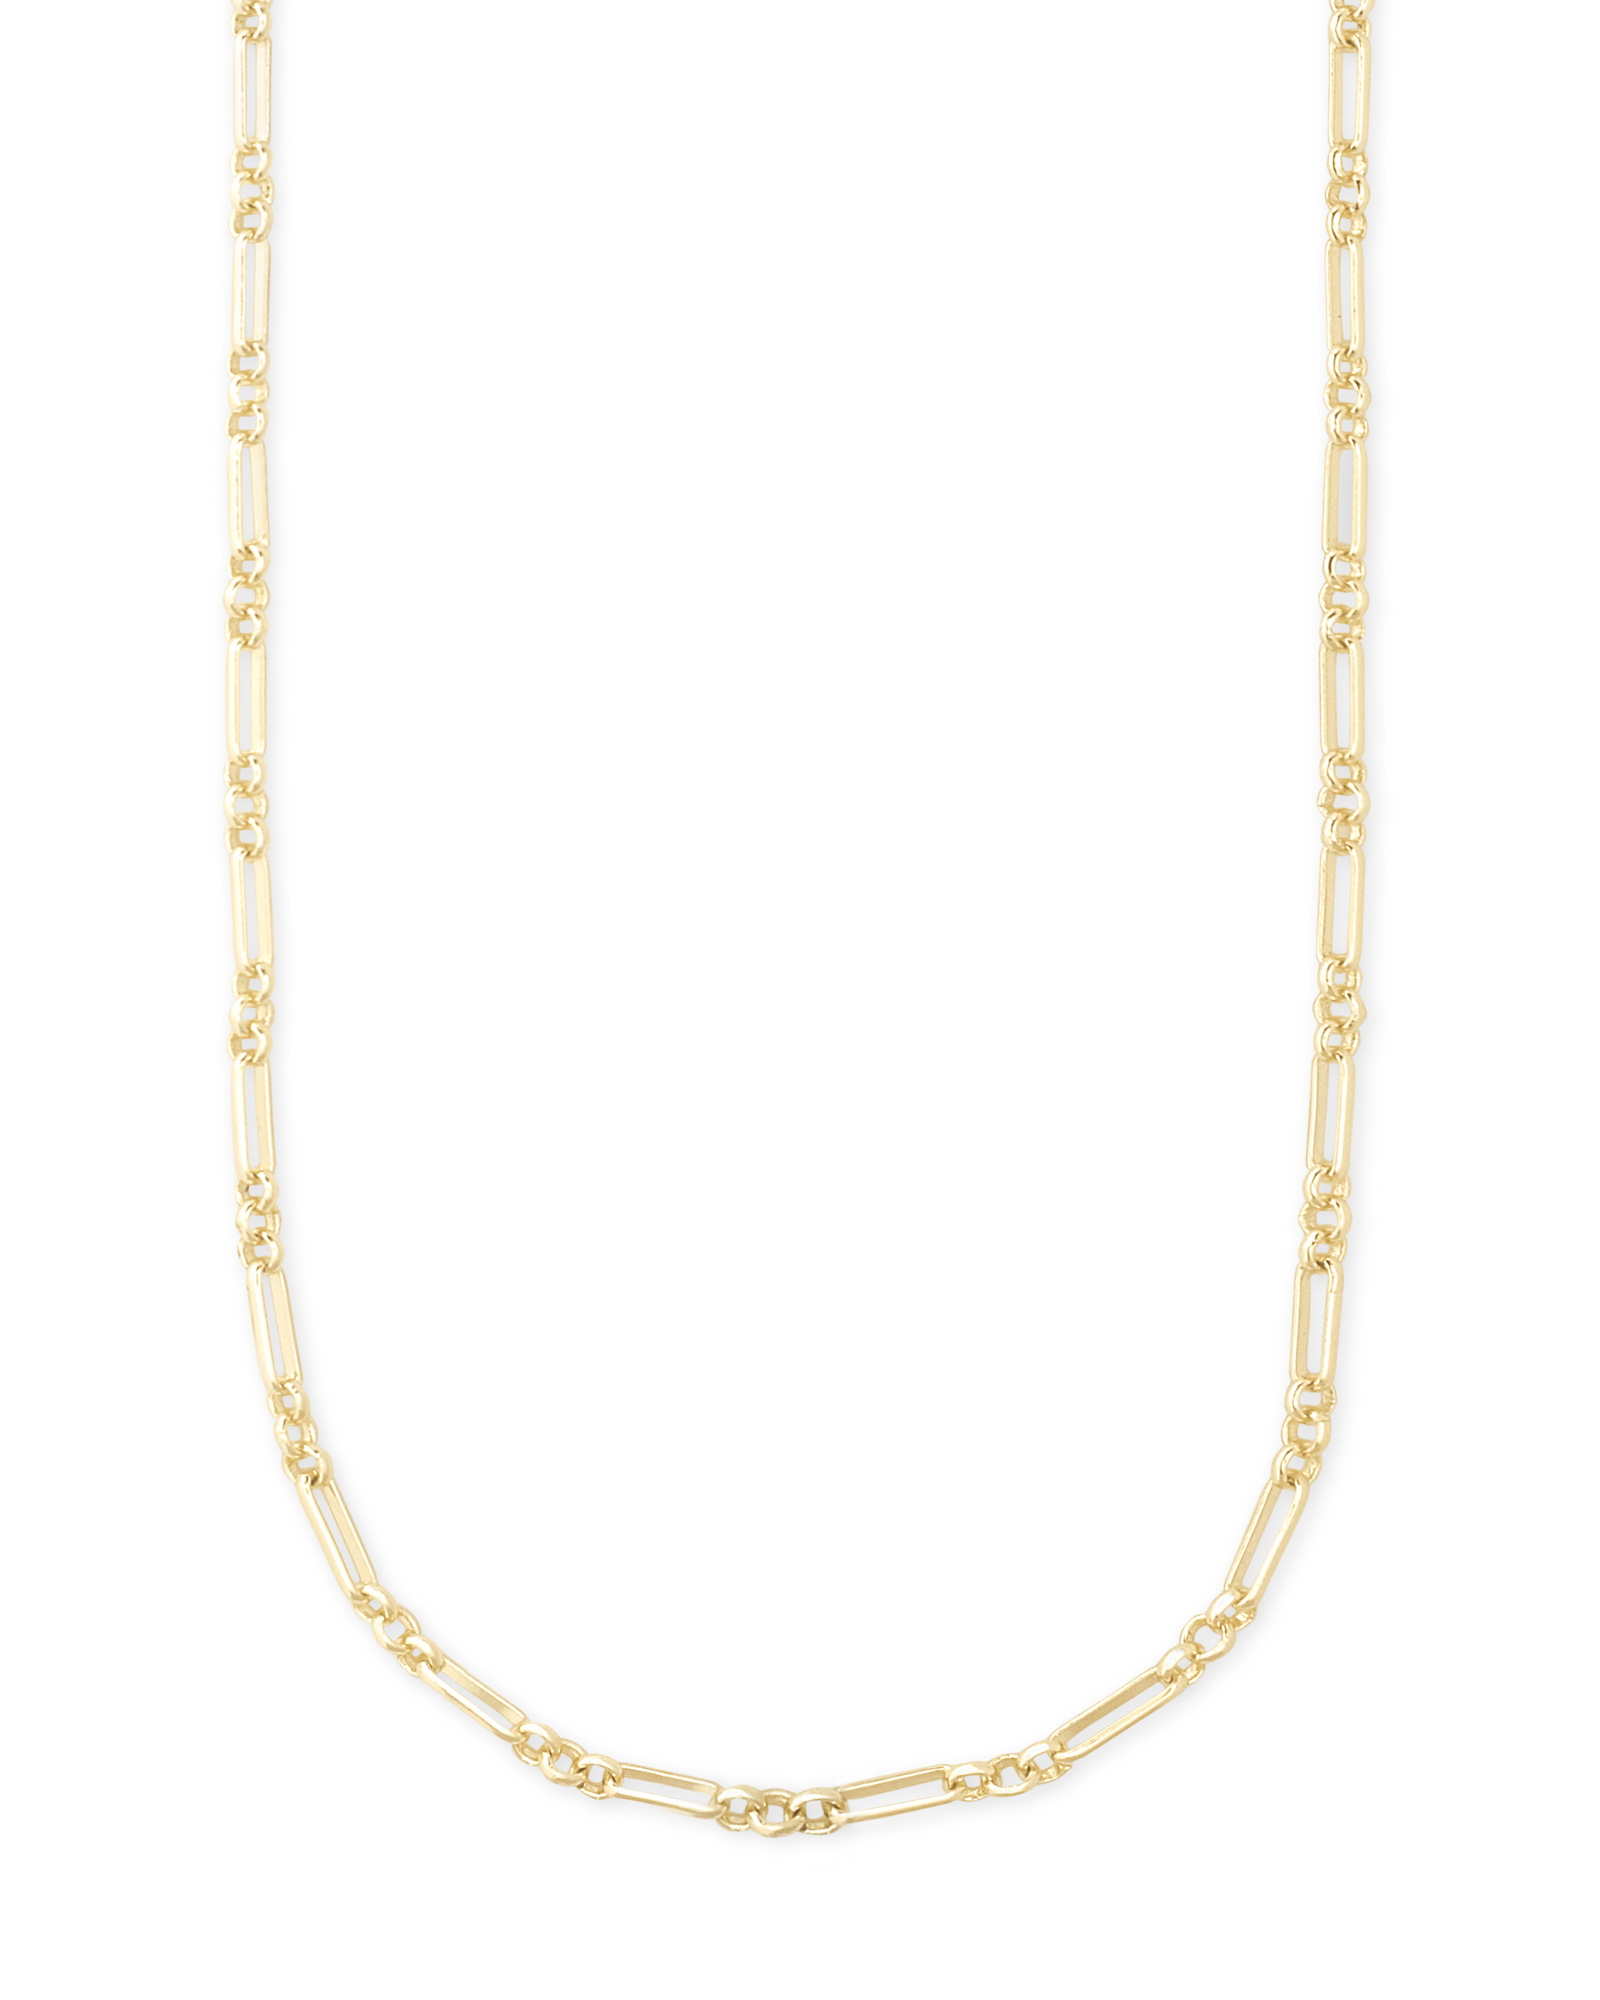 Samuel Chain Necklace in Gold | Kendra Scott